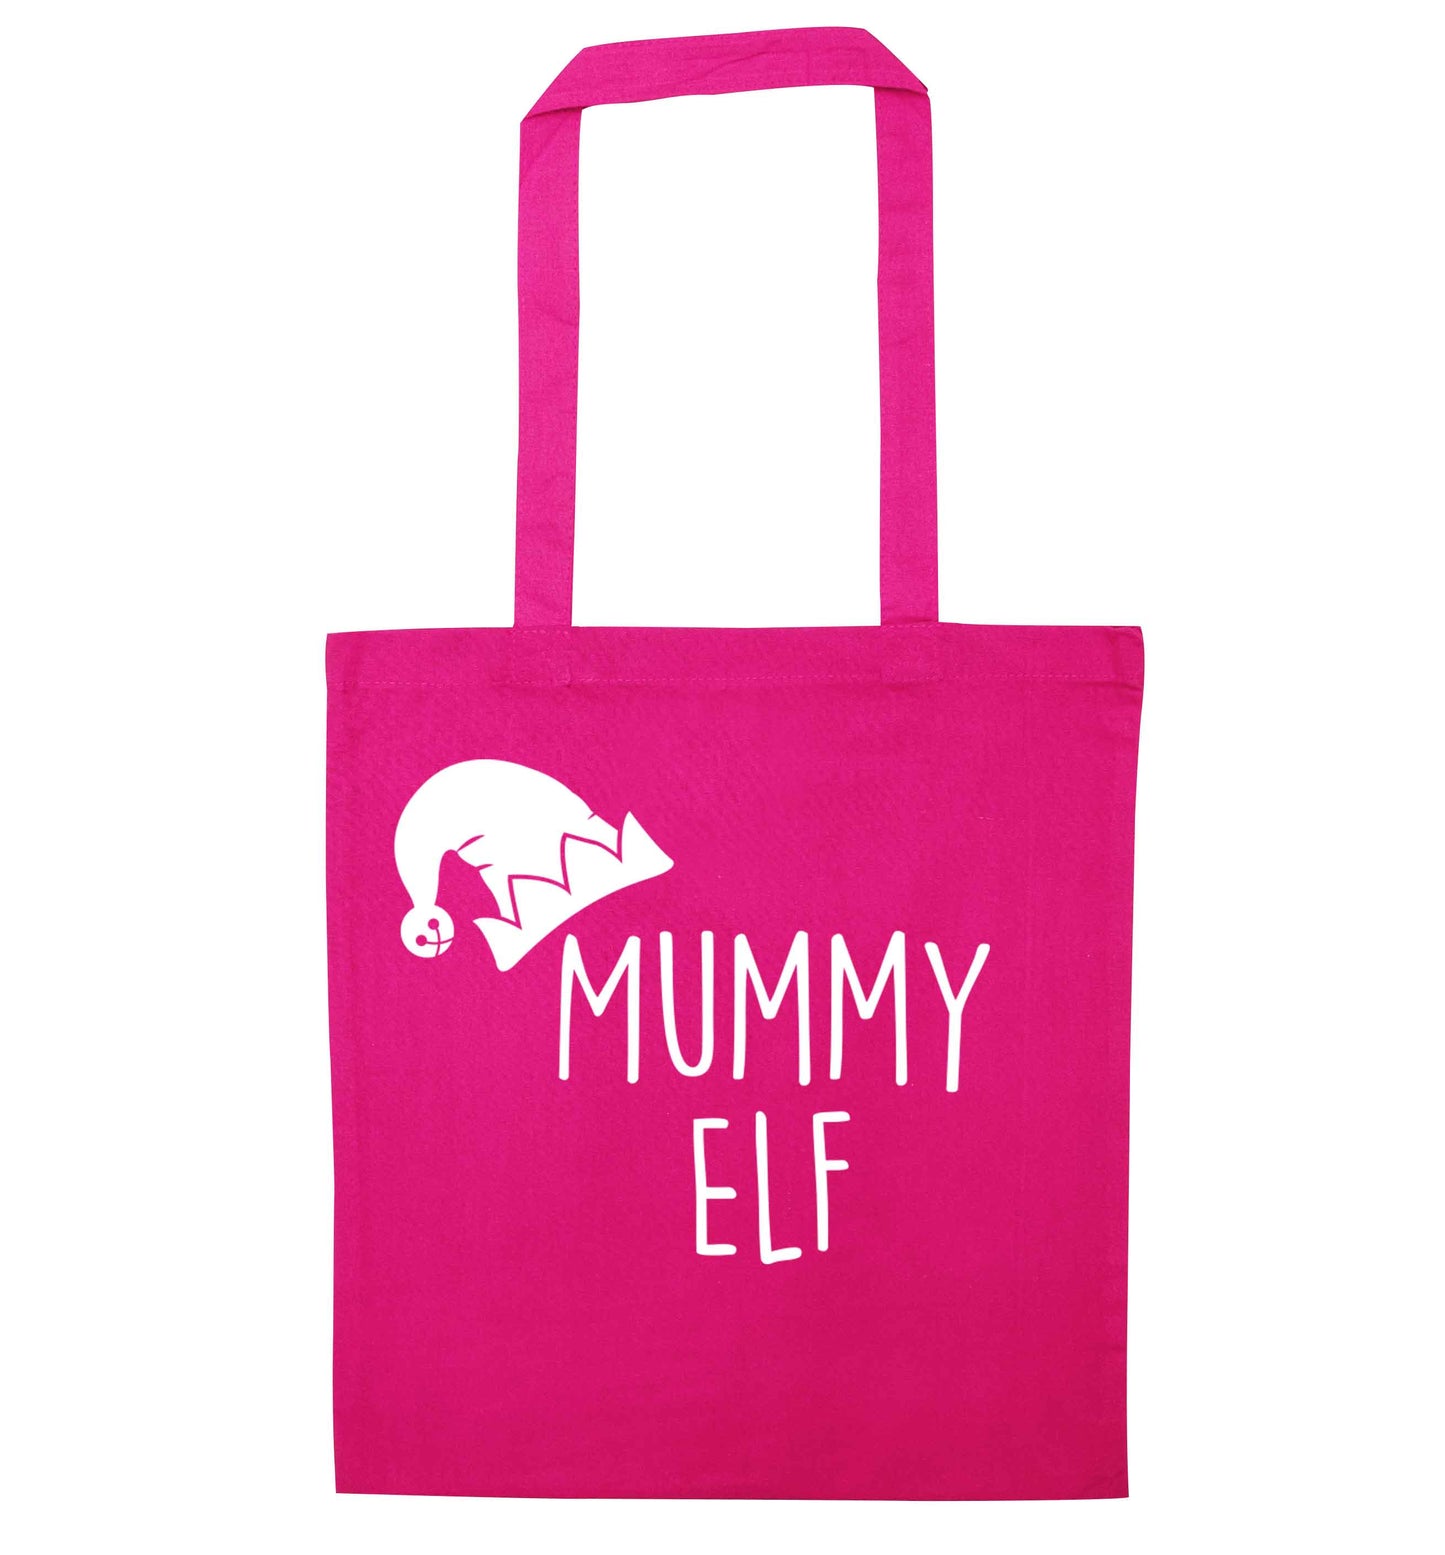 Mummy elf pink tote bag